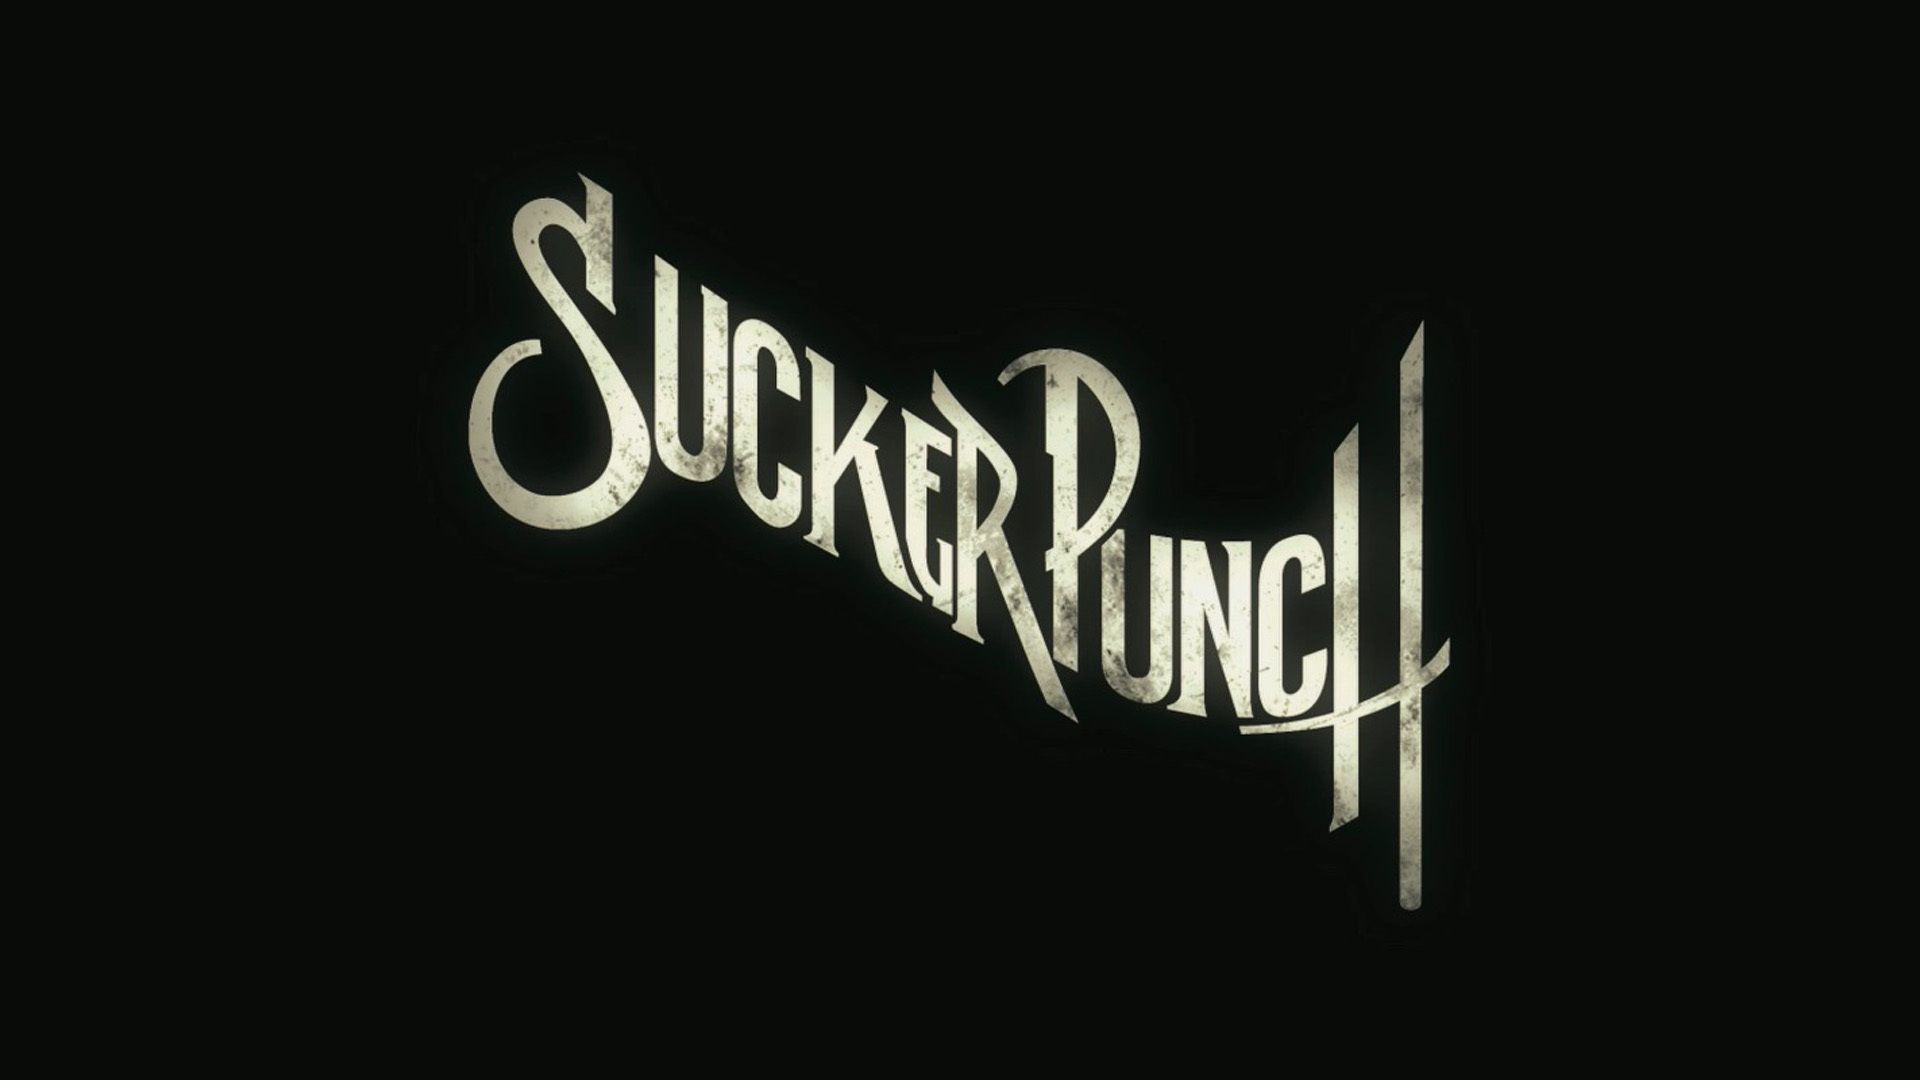 Sucker Punch - Sucker Punch Wallpaper (20757255) - Fanpop